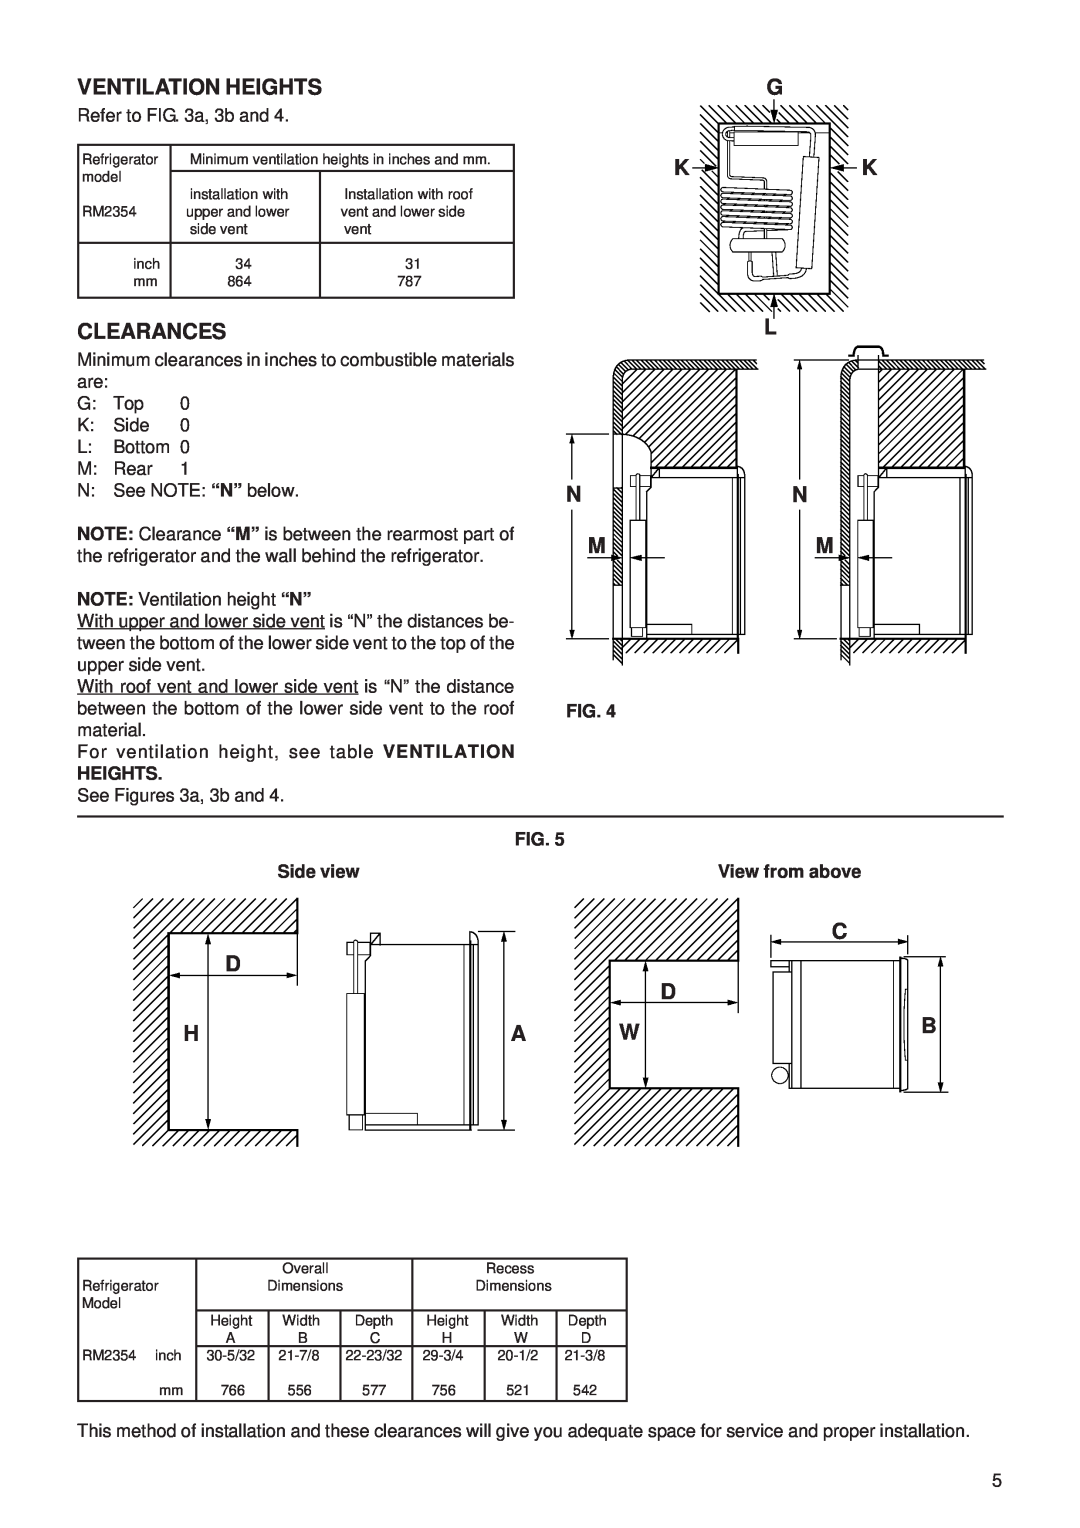 Dometic RM2354 manual Ventilation Heights, Clearances, L N M, D A W 